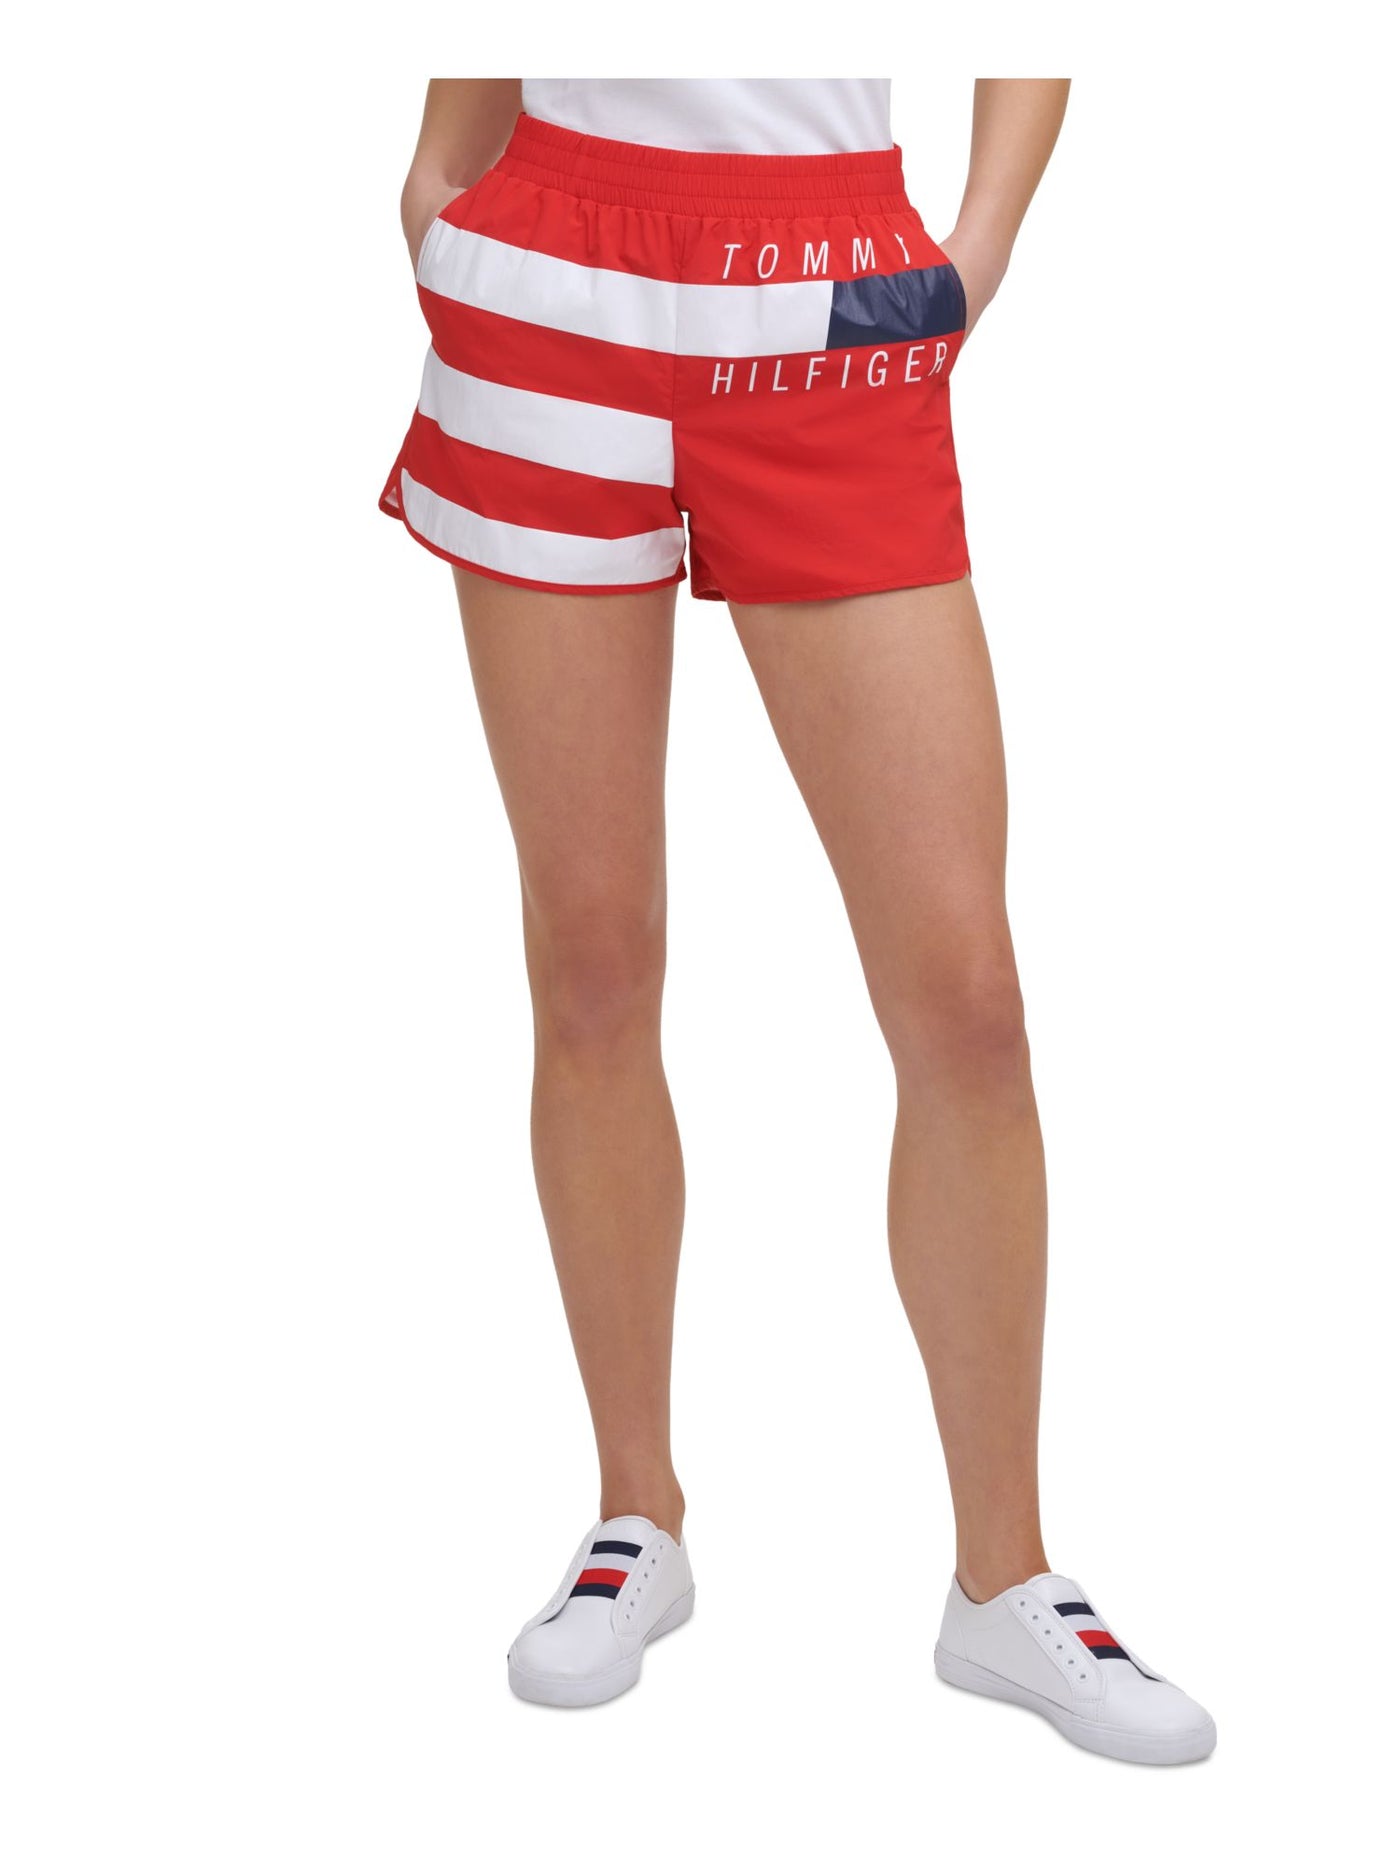 TOMMY HILFIGER SPORT Womens Red Stretch Pocketed Interior Briefs Elastic Waist Logo Graphic Active Wear Shorts XXL